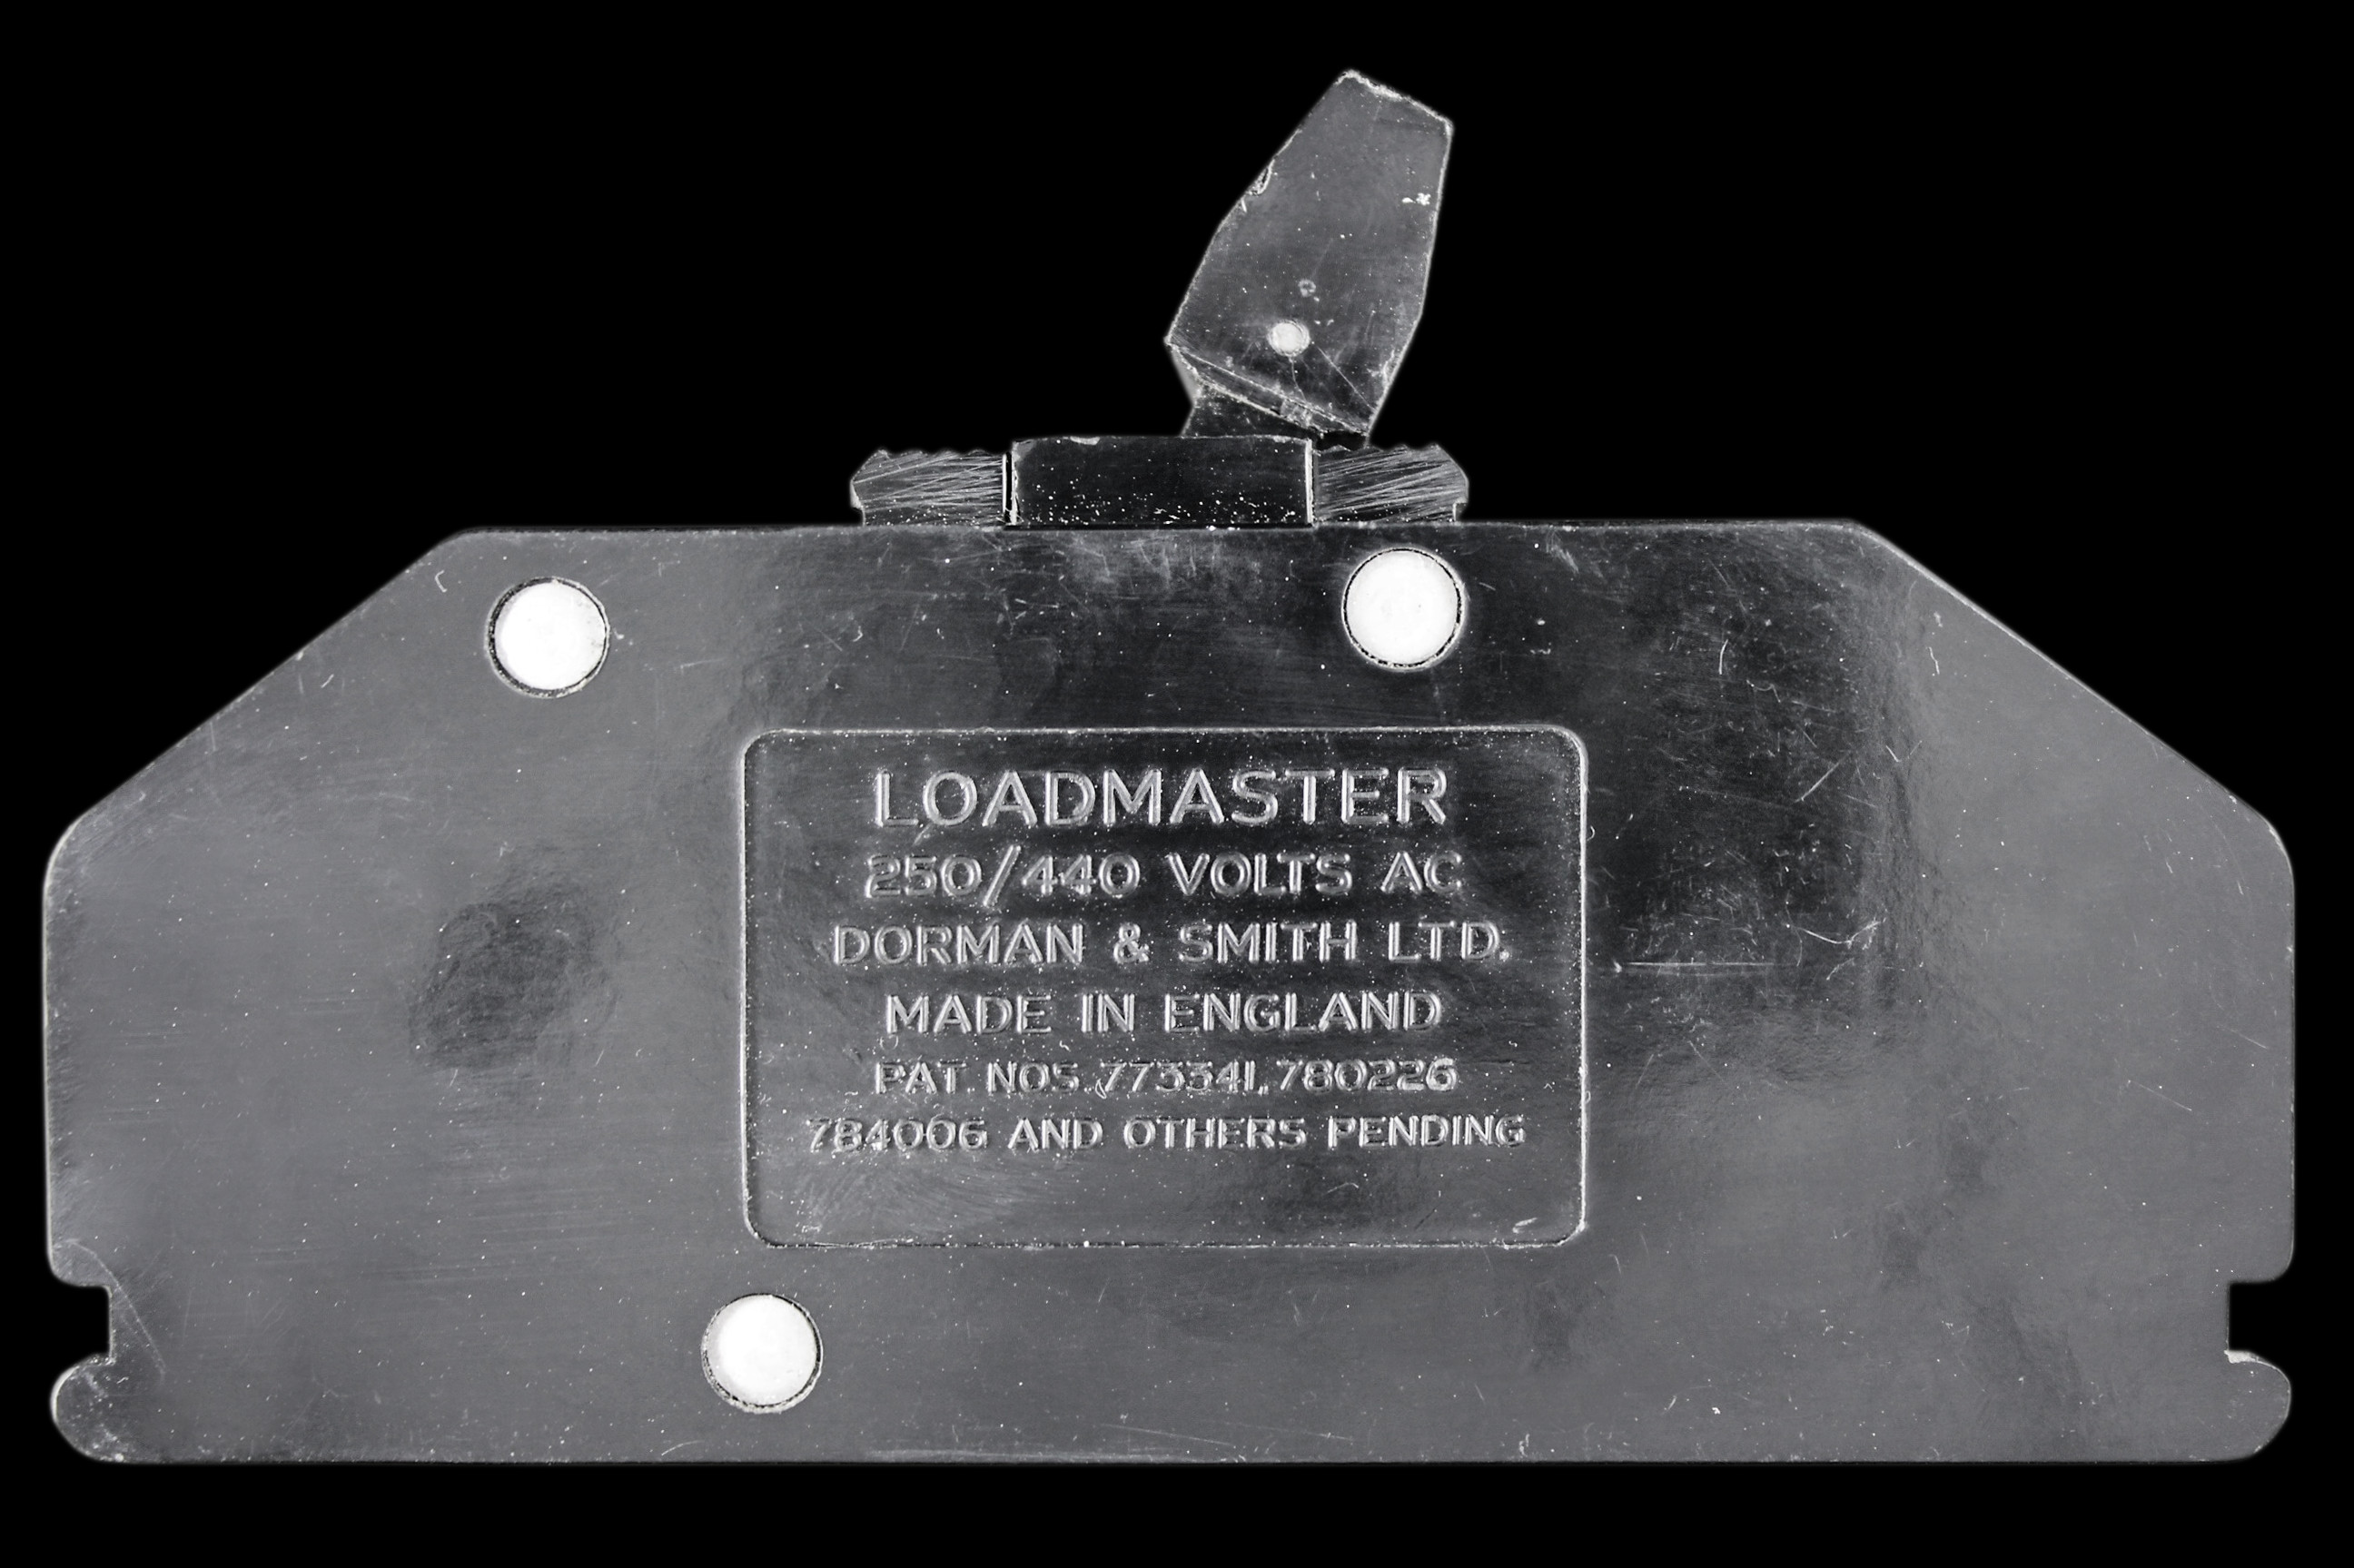 DORMAN SMITH 5 AMP M3 TRIPLE POLE MCB CIRCUIT BREAKER LOADMASTER